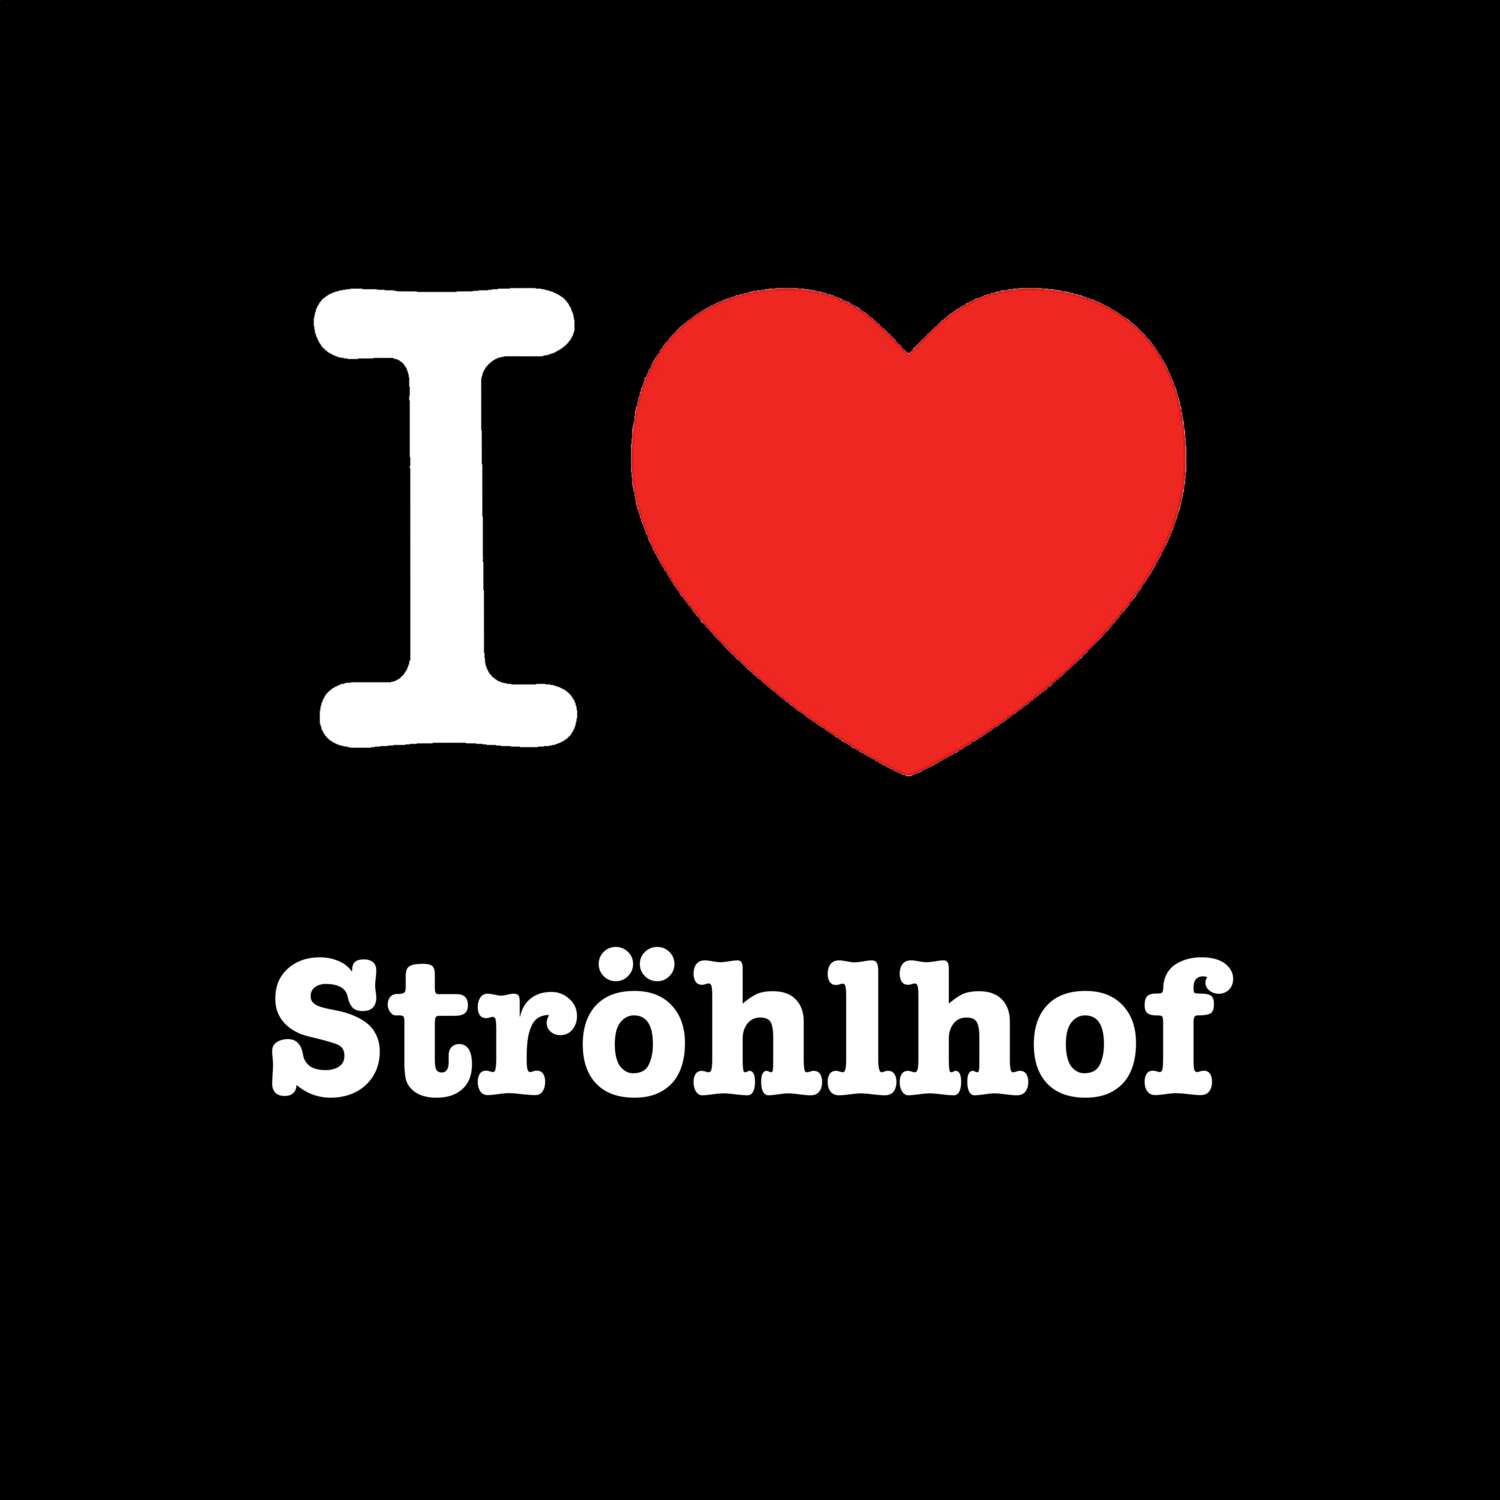 Ströhlhof T-Shirt »I love«